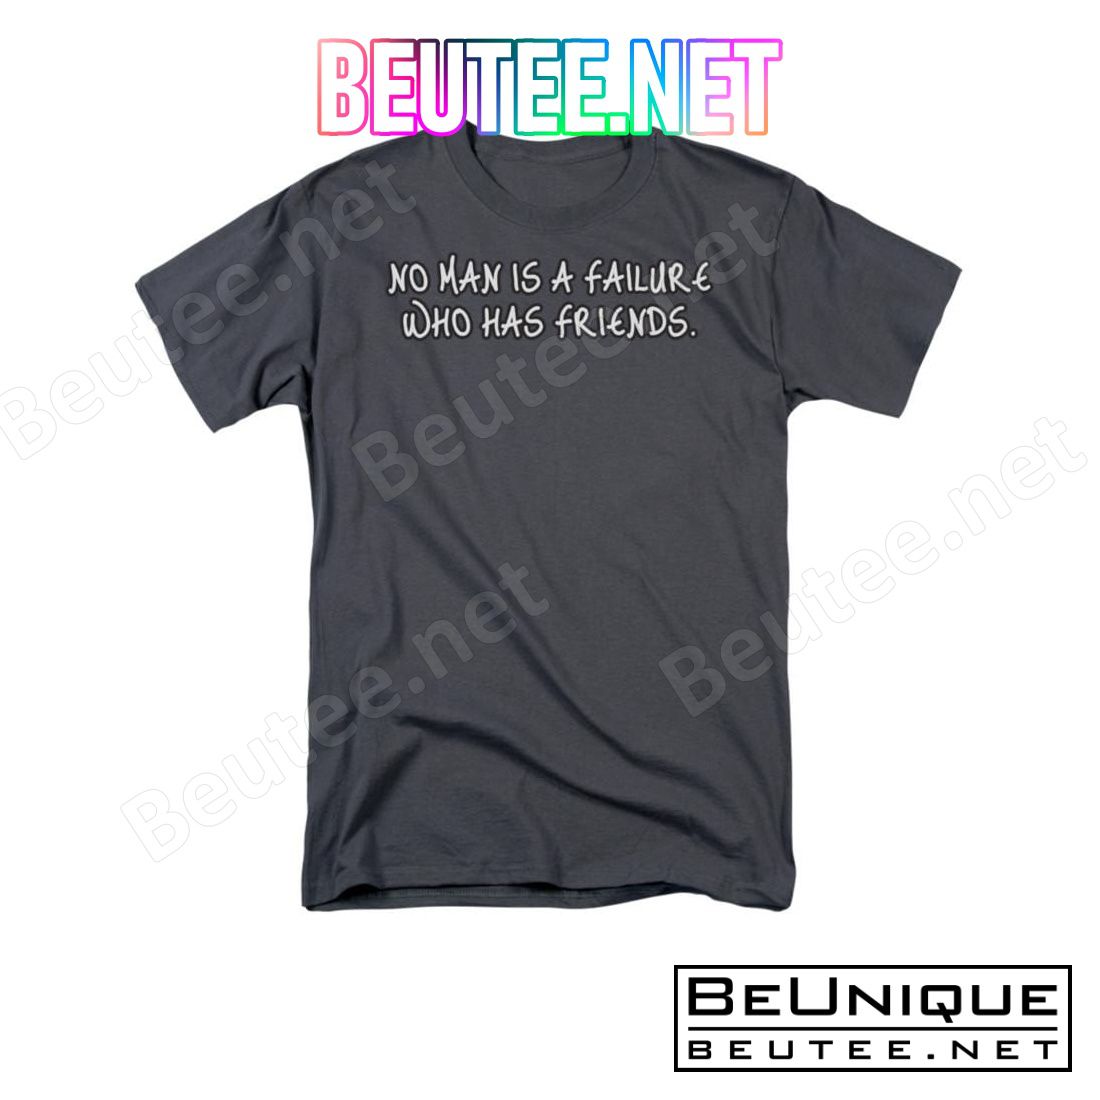 No Man Is A Failure Who Has Friends T-shirt